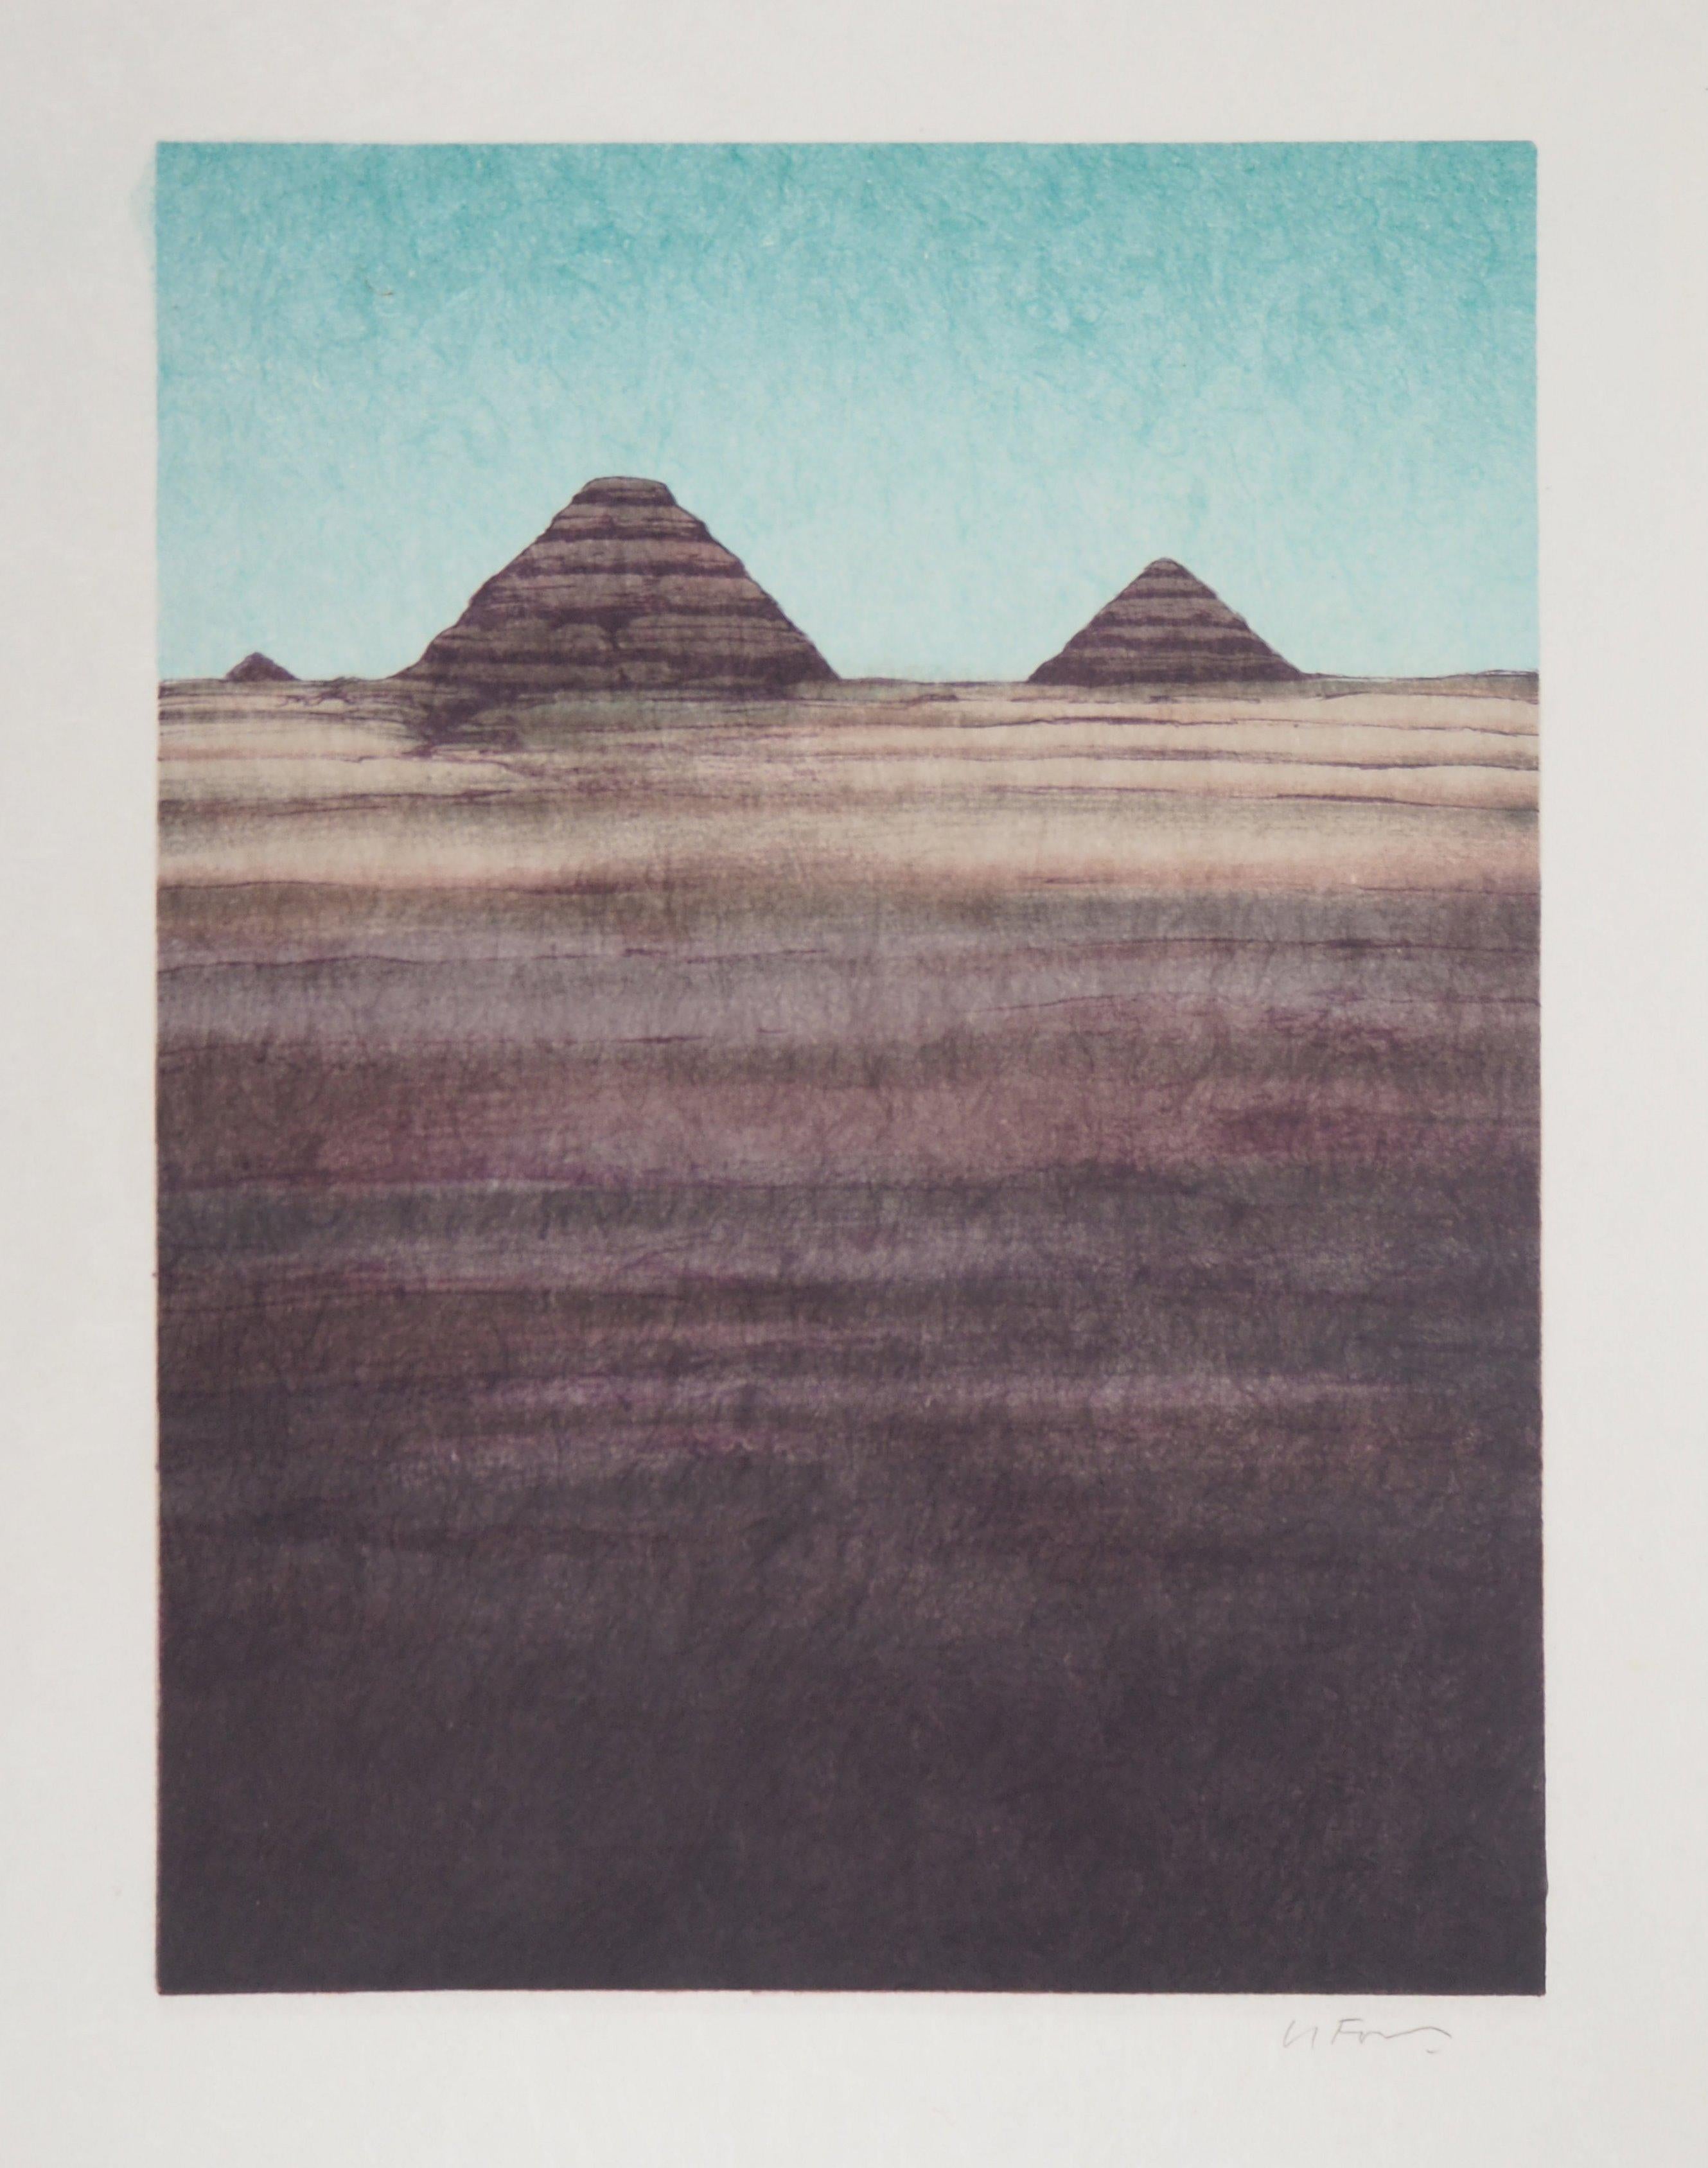 Alain Le Foll Landscape Print - Egypt : The Pyramid of Giza - Handsigned Original Lithograph